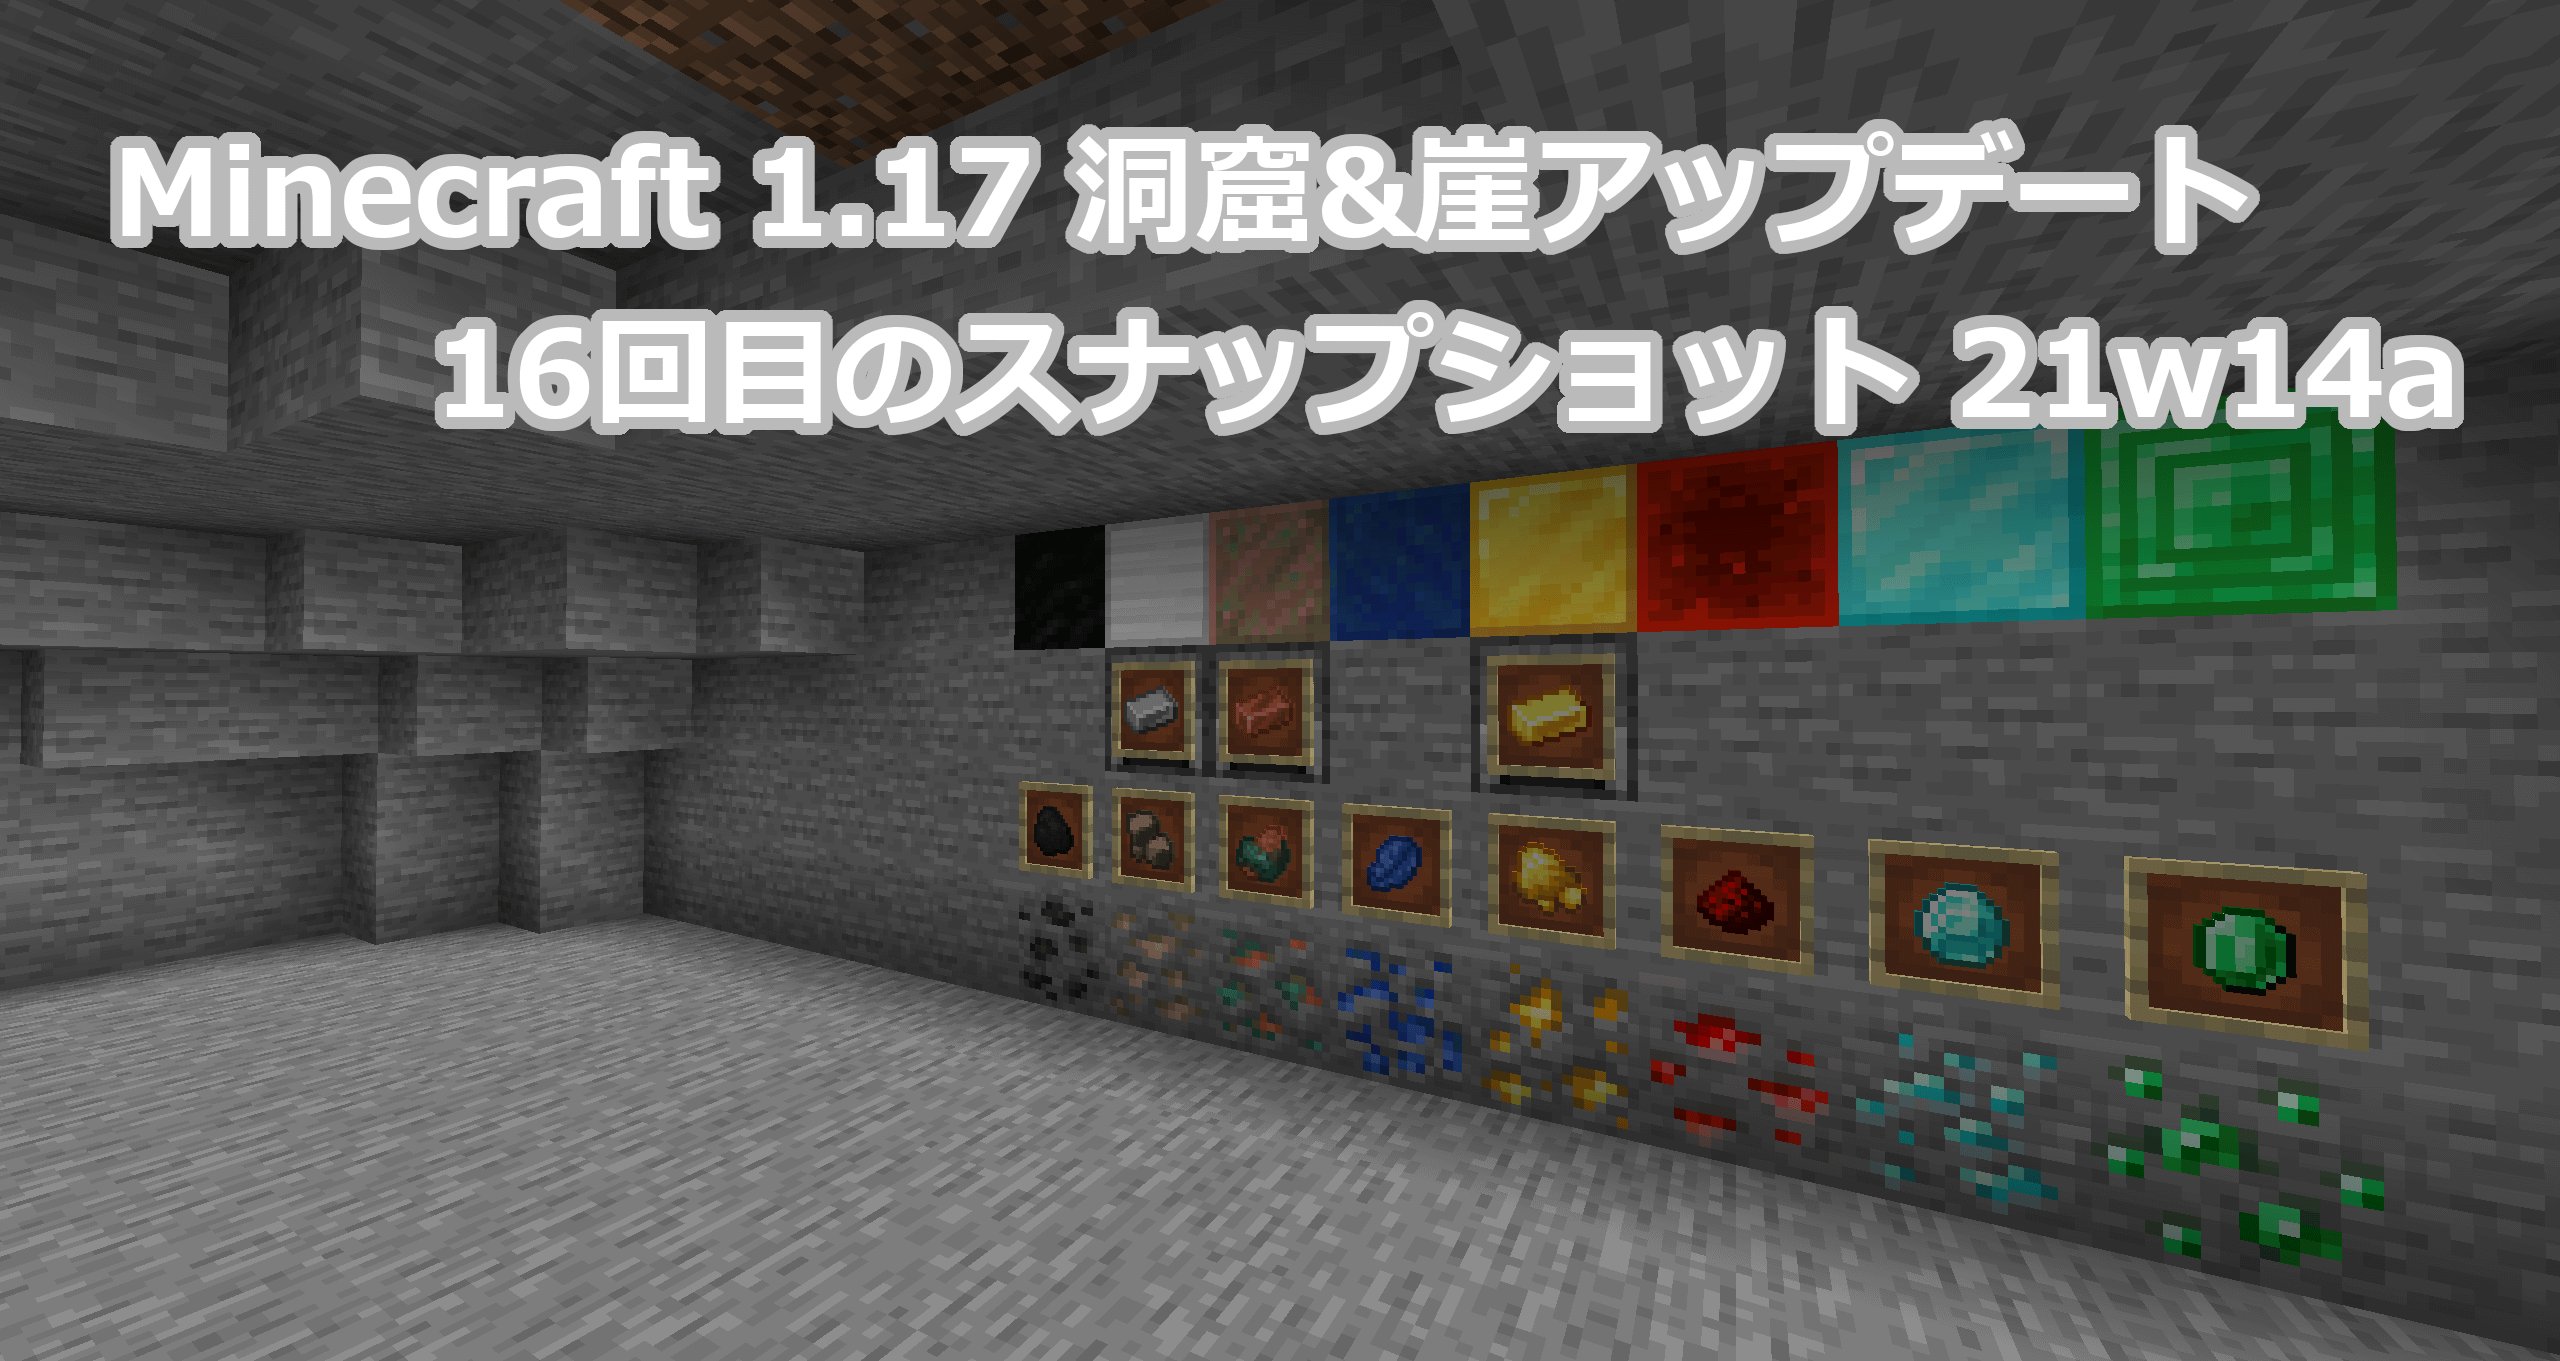 Minecraft 1.17 16回目のスナップショット21w14aリリース情報｜鉱石の原石追加で鉱石の入手ルートを統一